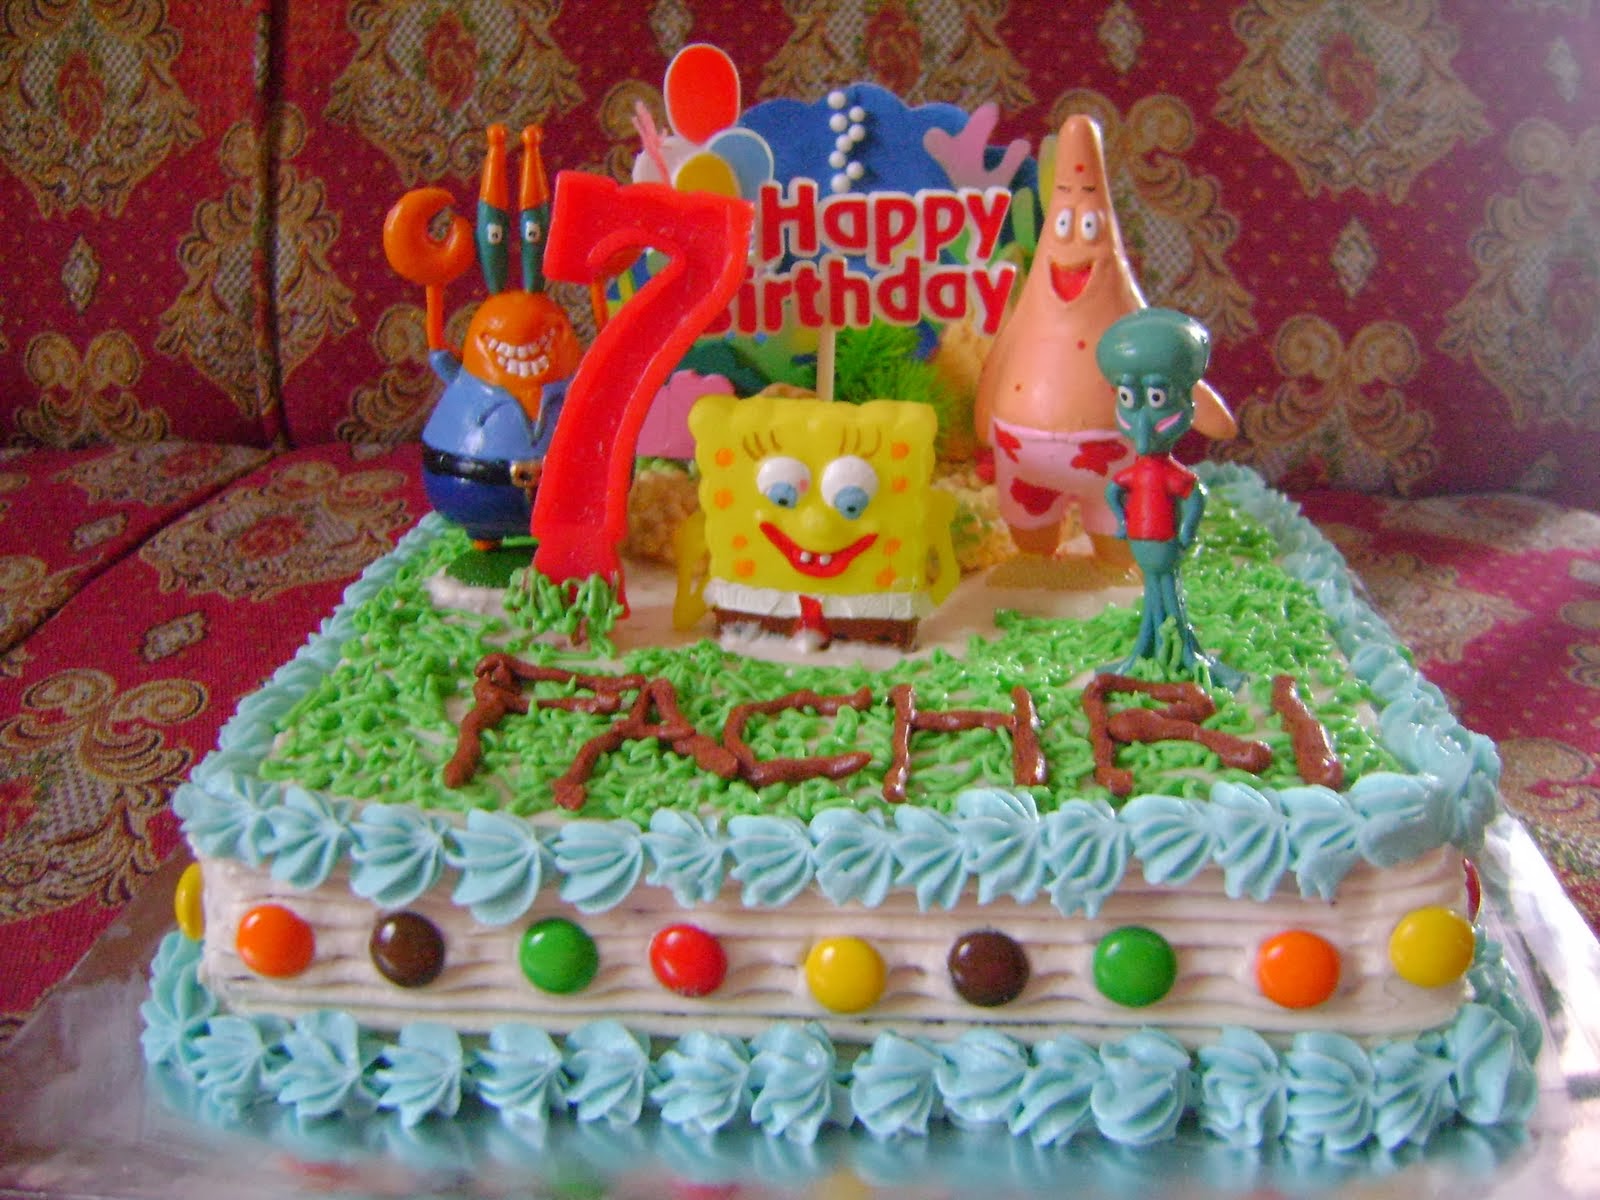 Gambar kue ulang tahun - Deqwan1 Blog